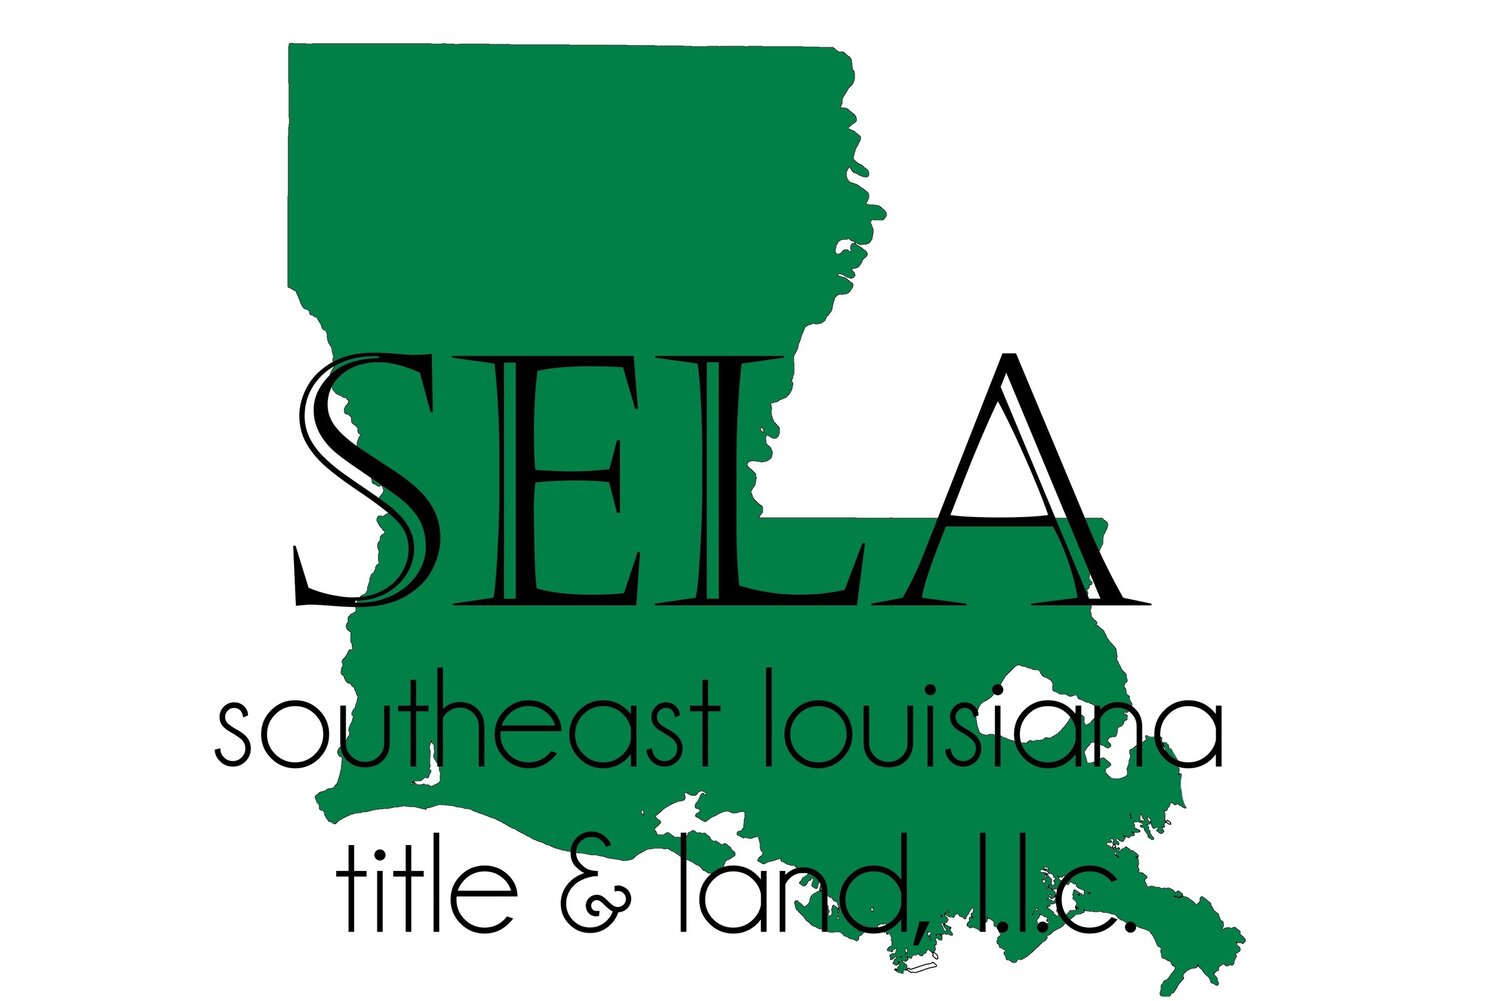 Southeast Louisiana Title and Land, LLC